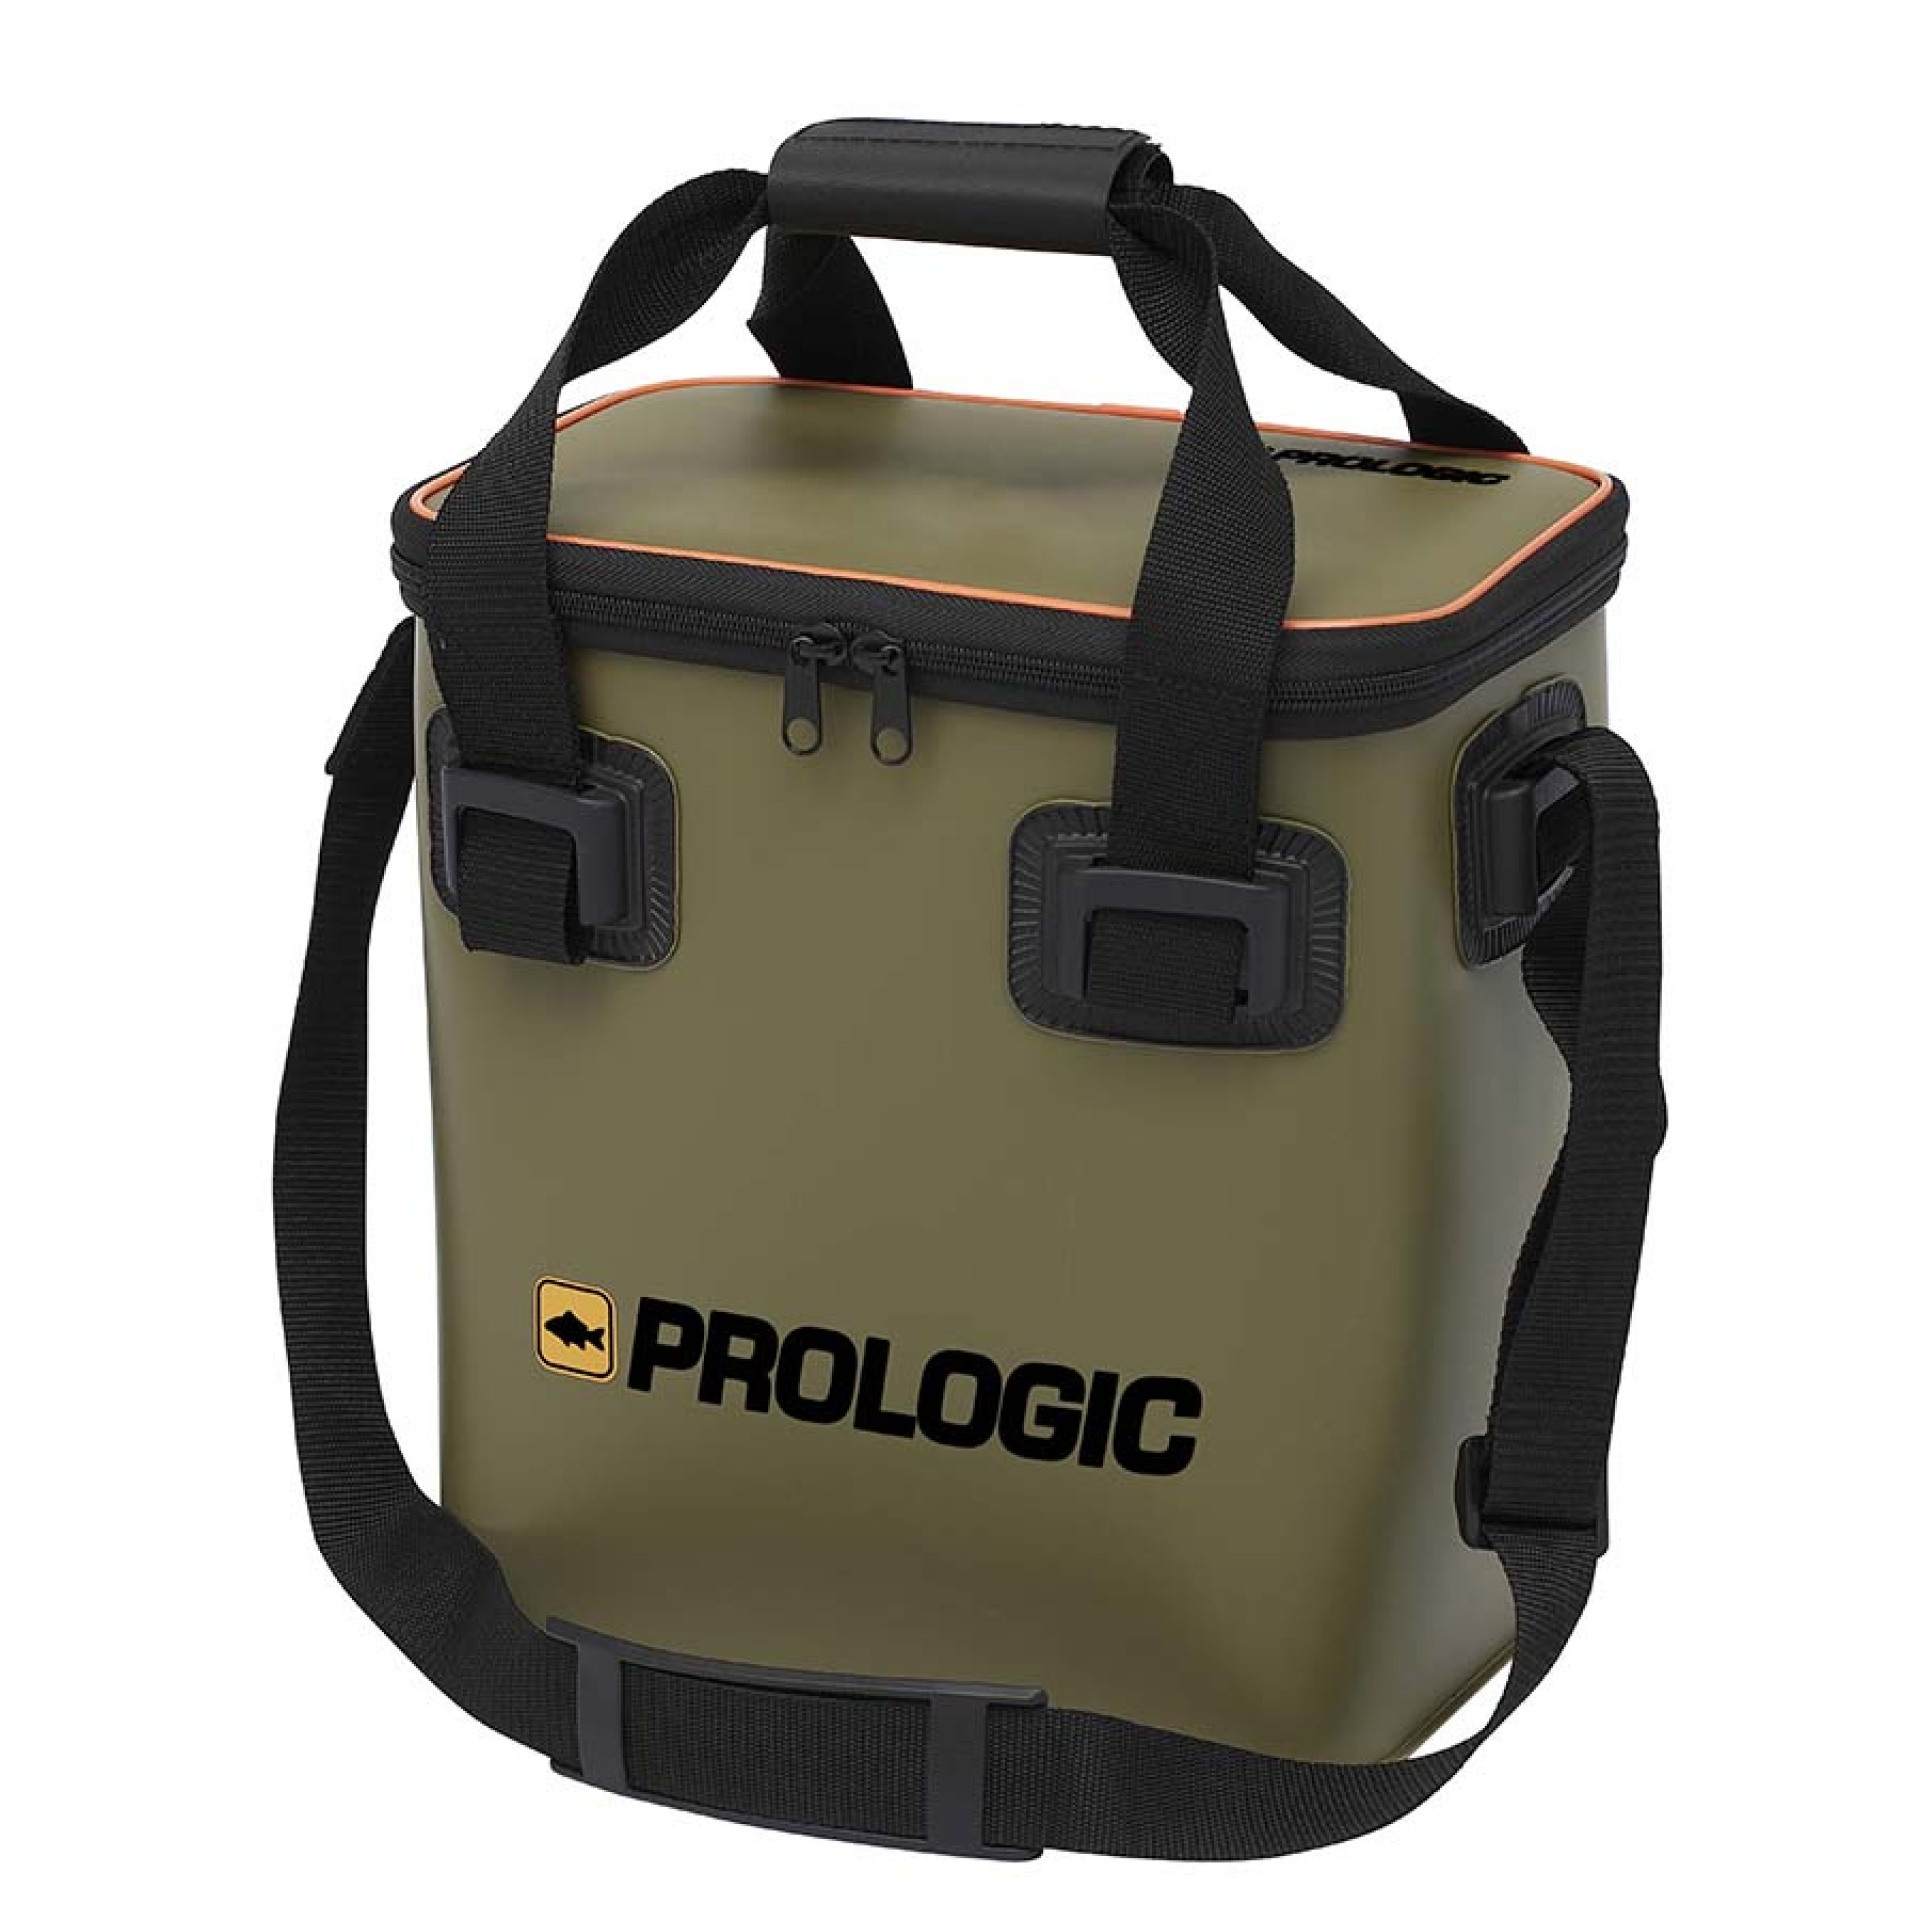 Prologic Storm Safe Insulated Bag